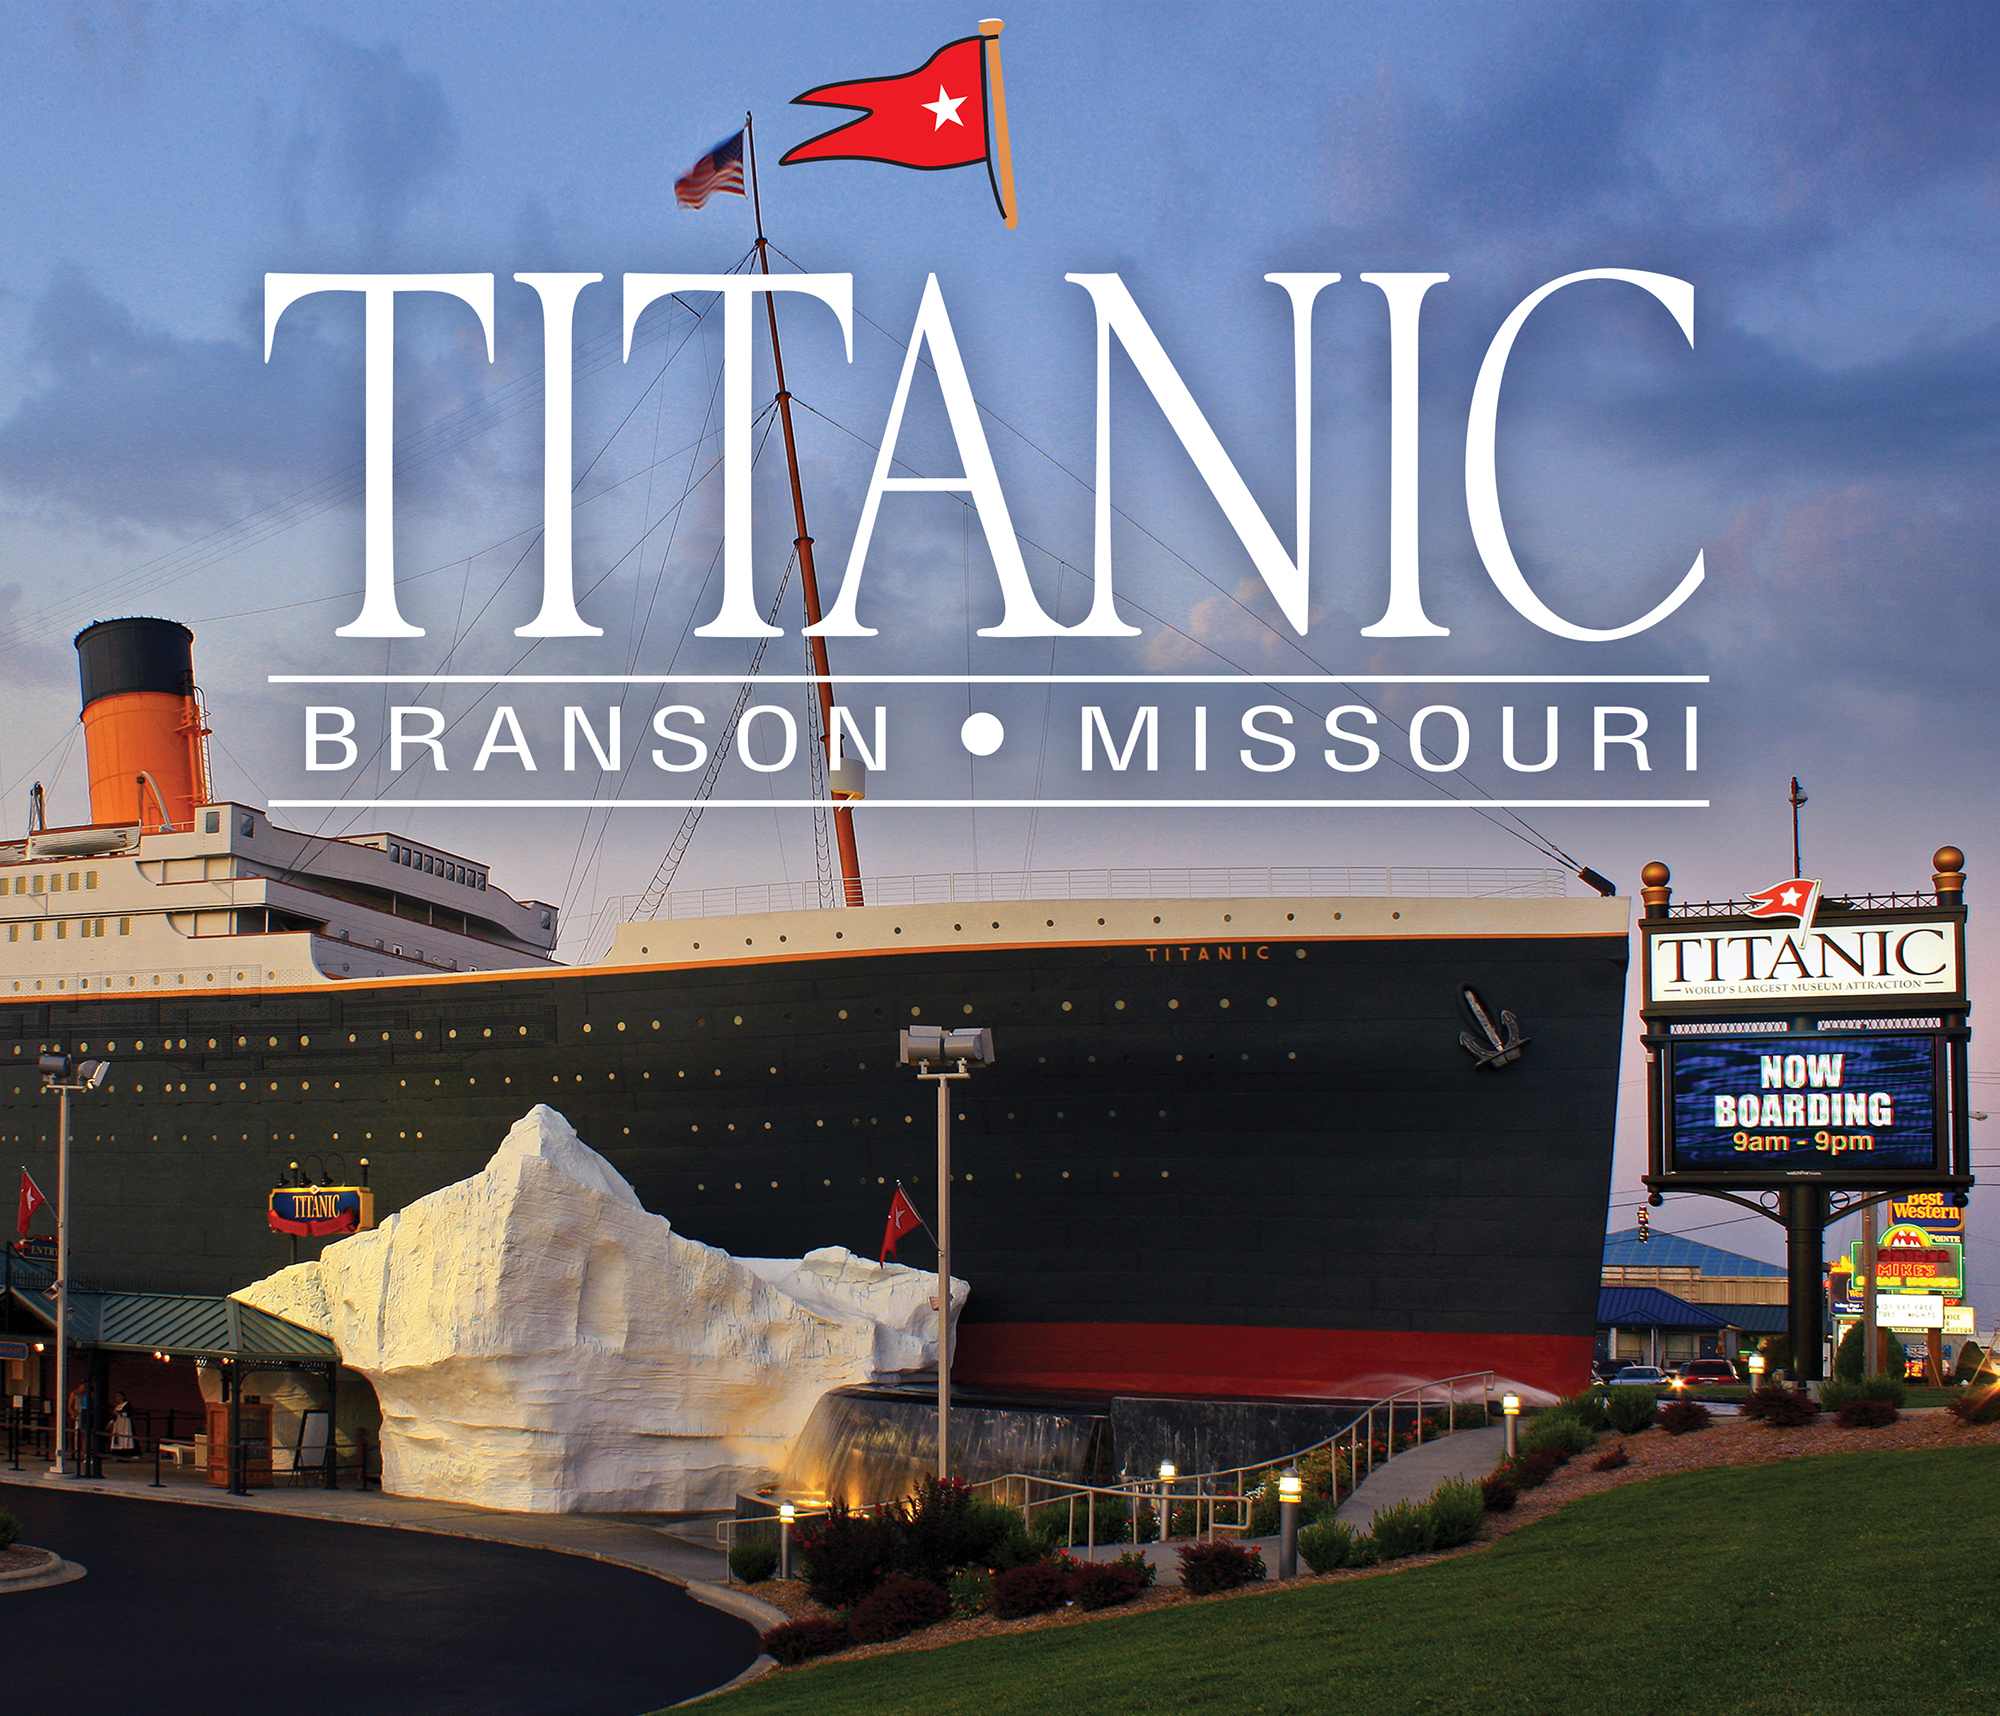 Media - Titanic School Groups - Titanic Branson